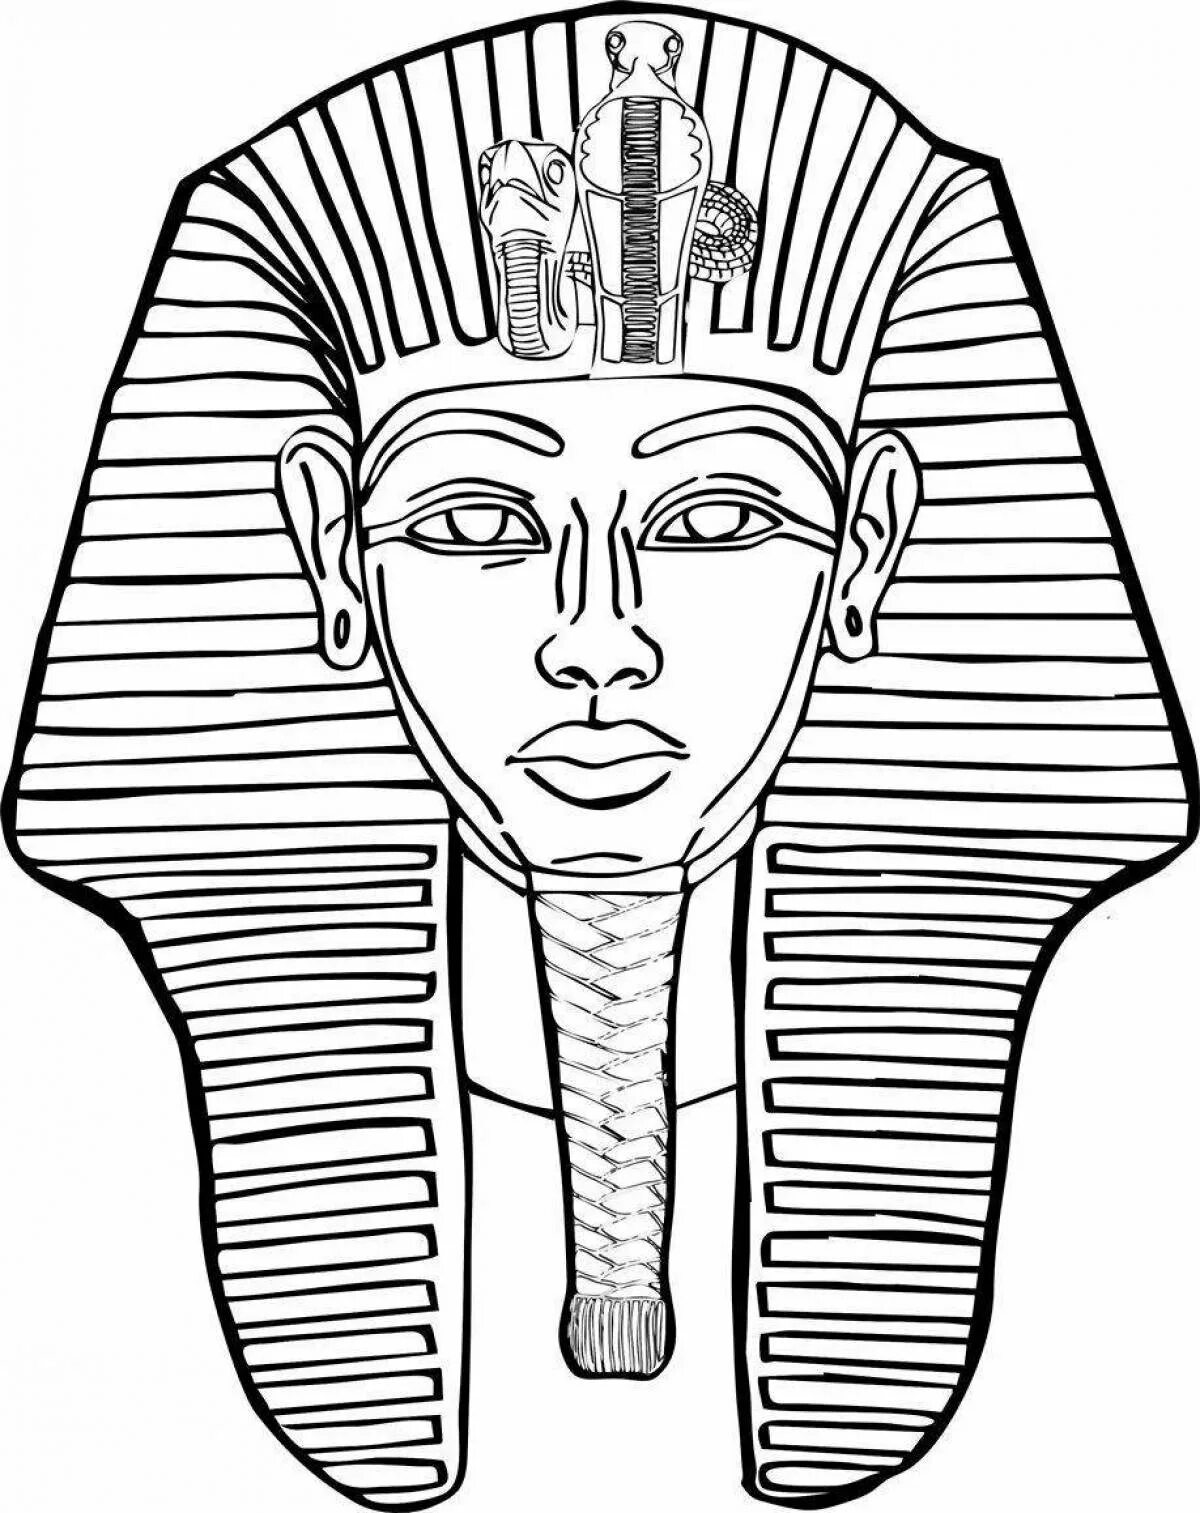 Маска фараона Тутанхамона. Маска маска Тутанхамона фараона. Фараон Египет раскраска Тутанхамон. Фараон Египта Тутанхамон эскиз. Маска тутанхамона 5 класс